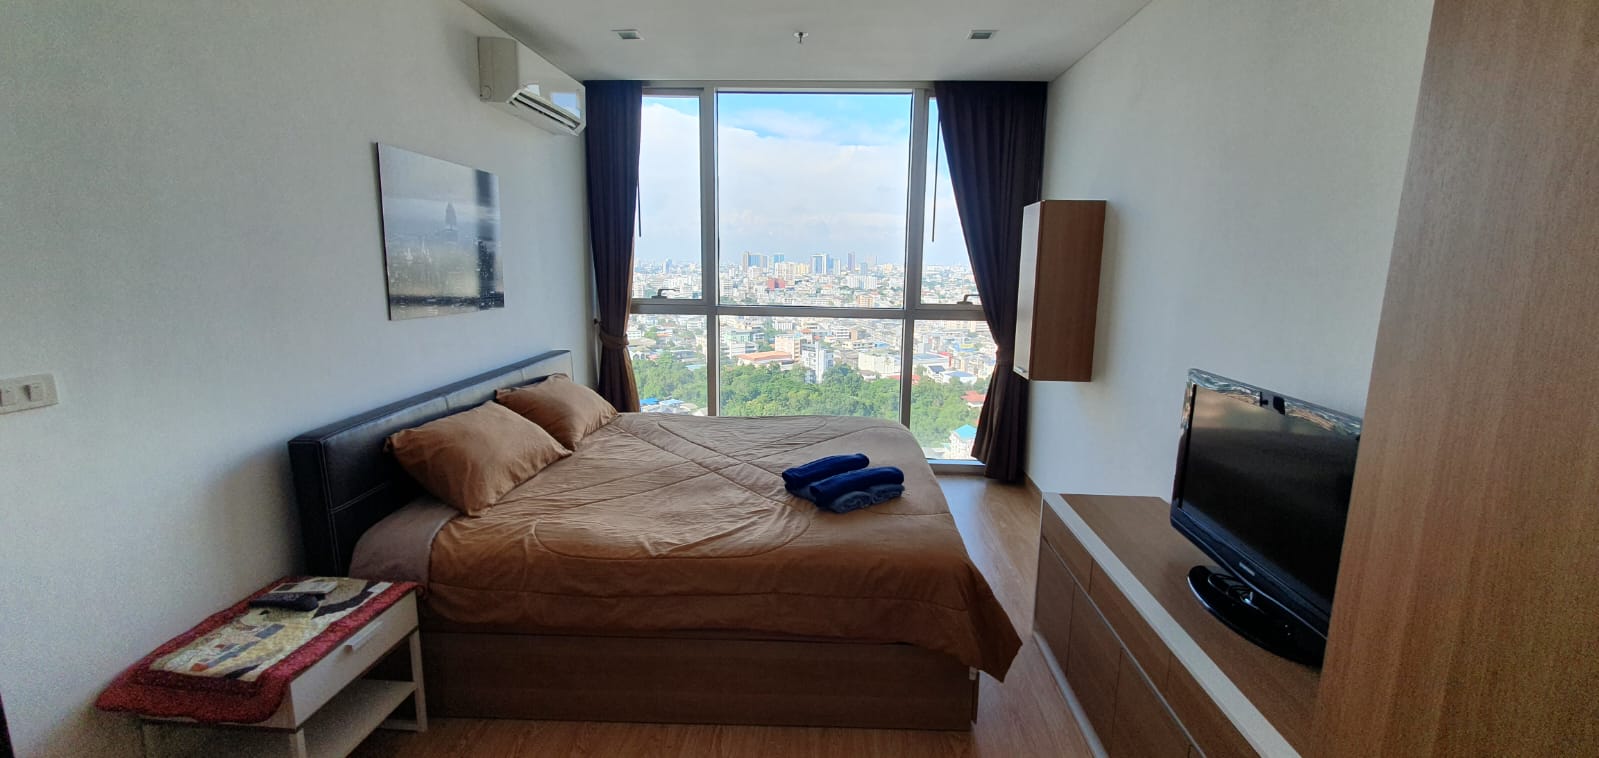 1 Bedroom, 1 Bathroom 55sqm size 25th Flr at Le Luk Condominium For Rent 23-25K/Month